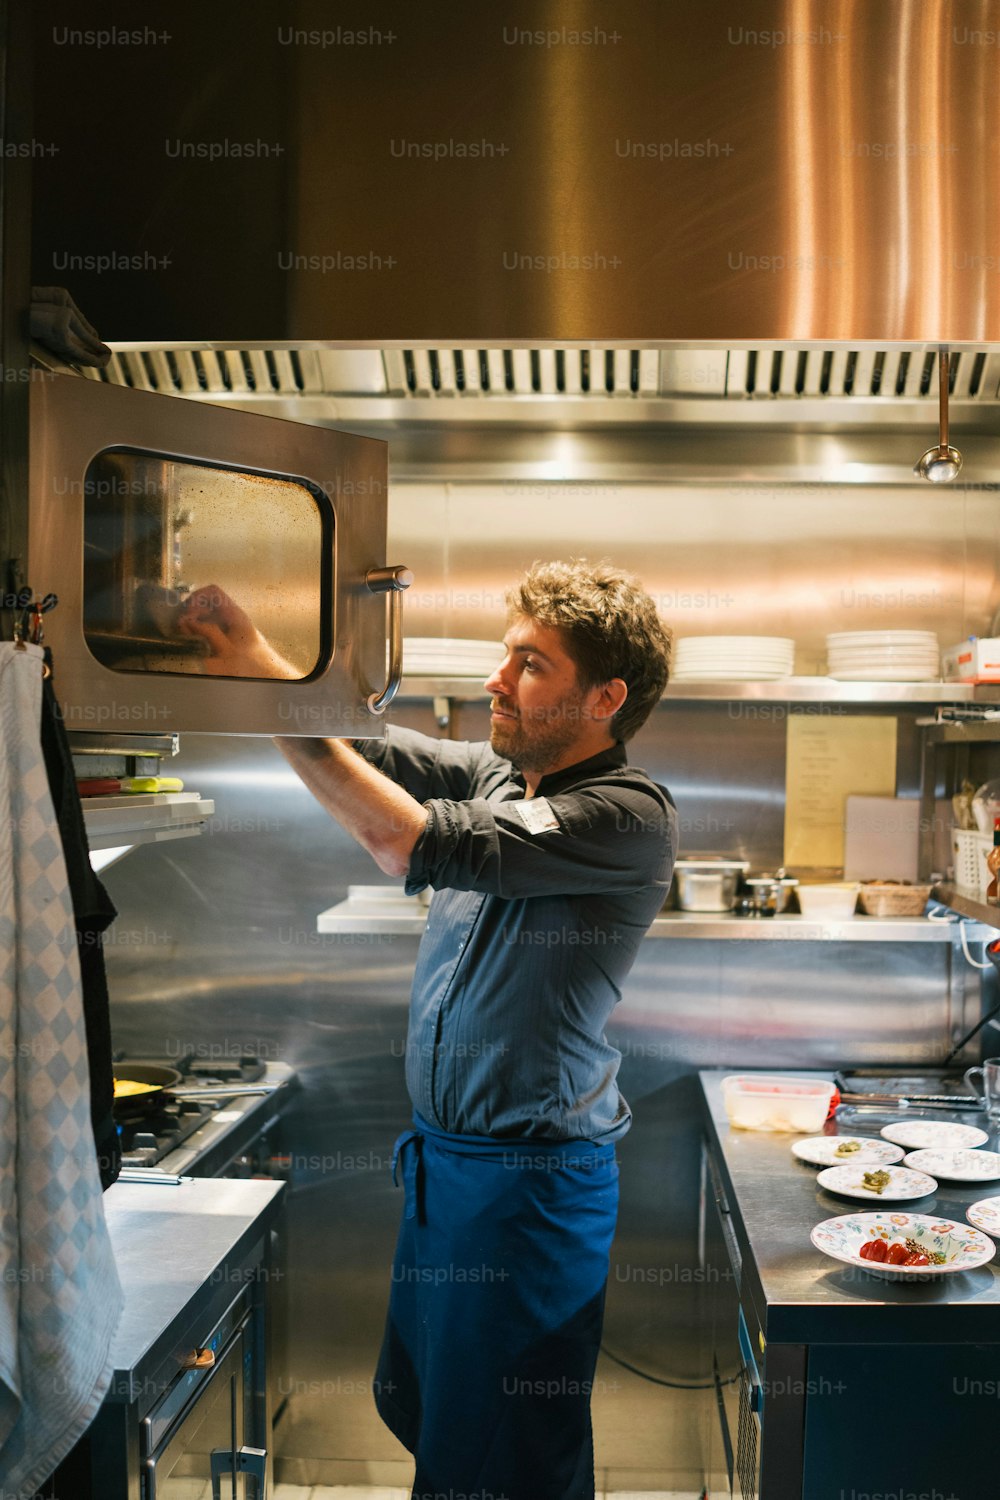 Un uomo in una cucina con in mano un tostapane